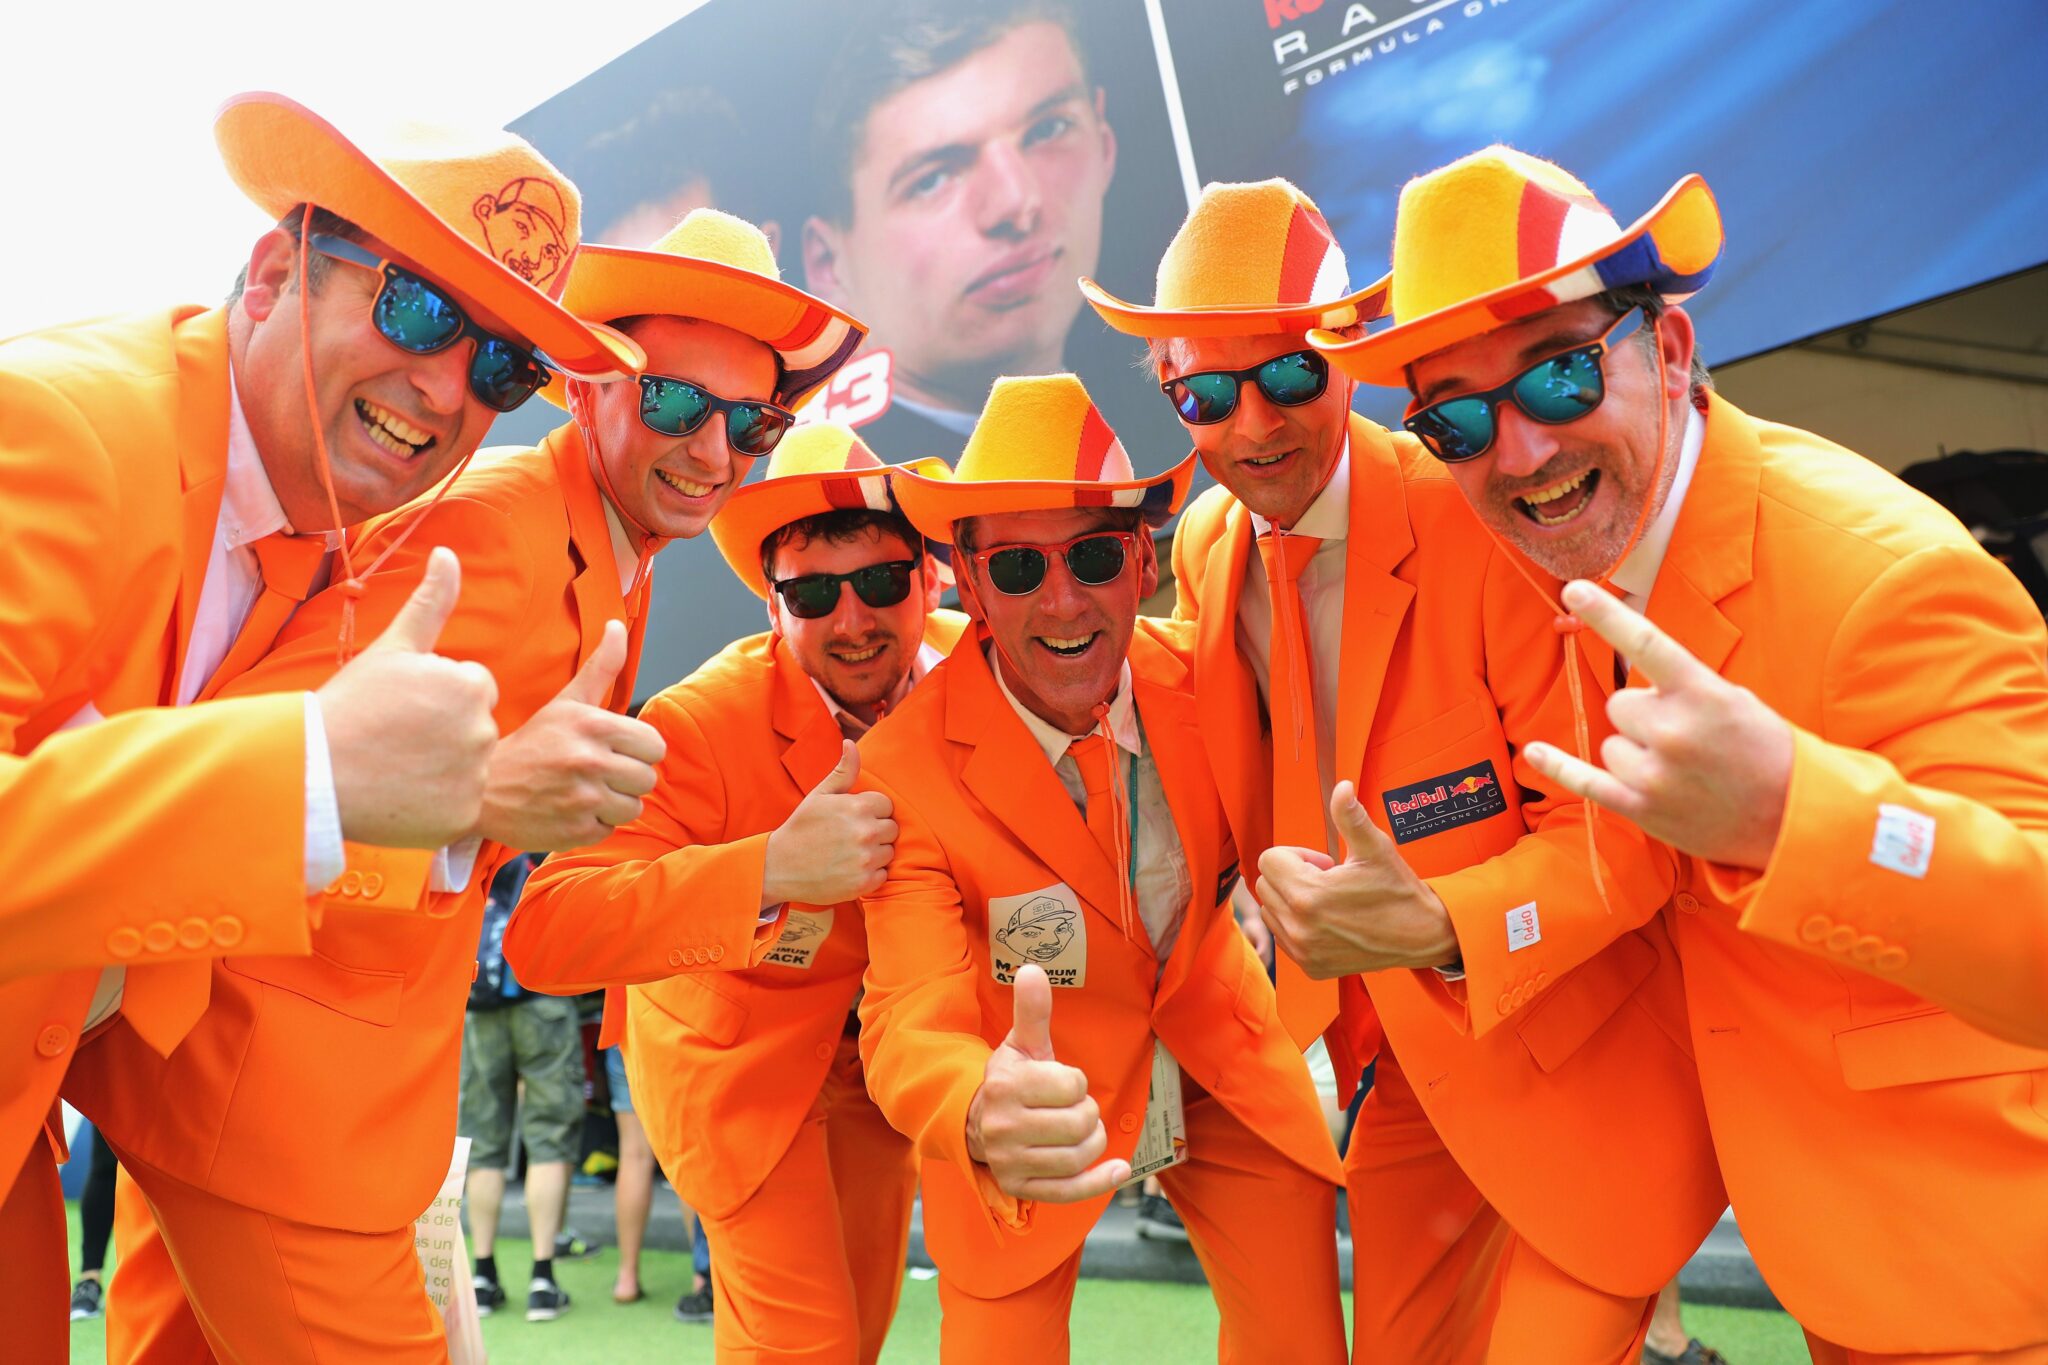 Verstappen fans dressed up celebrating at the Race track